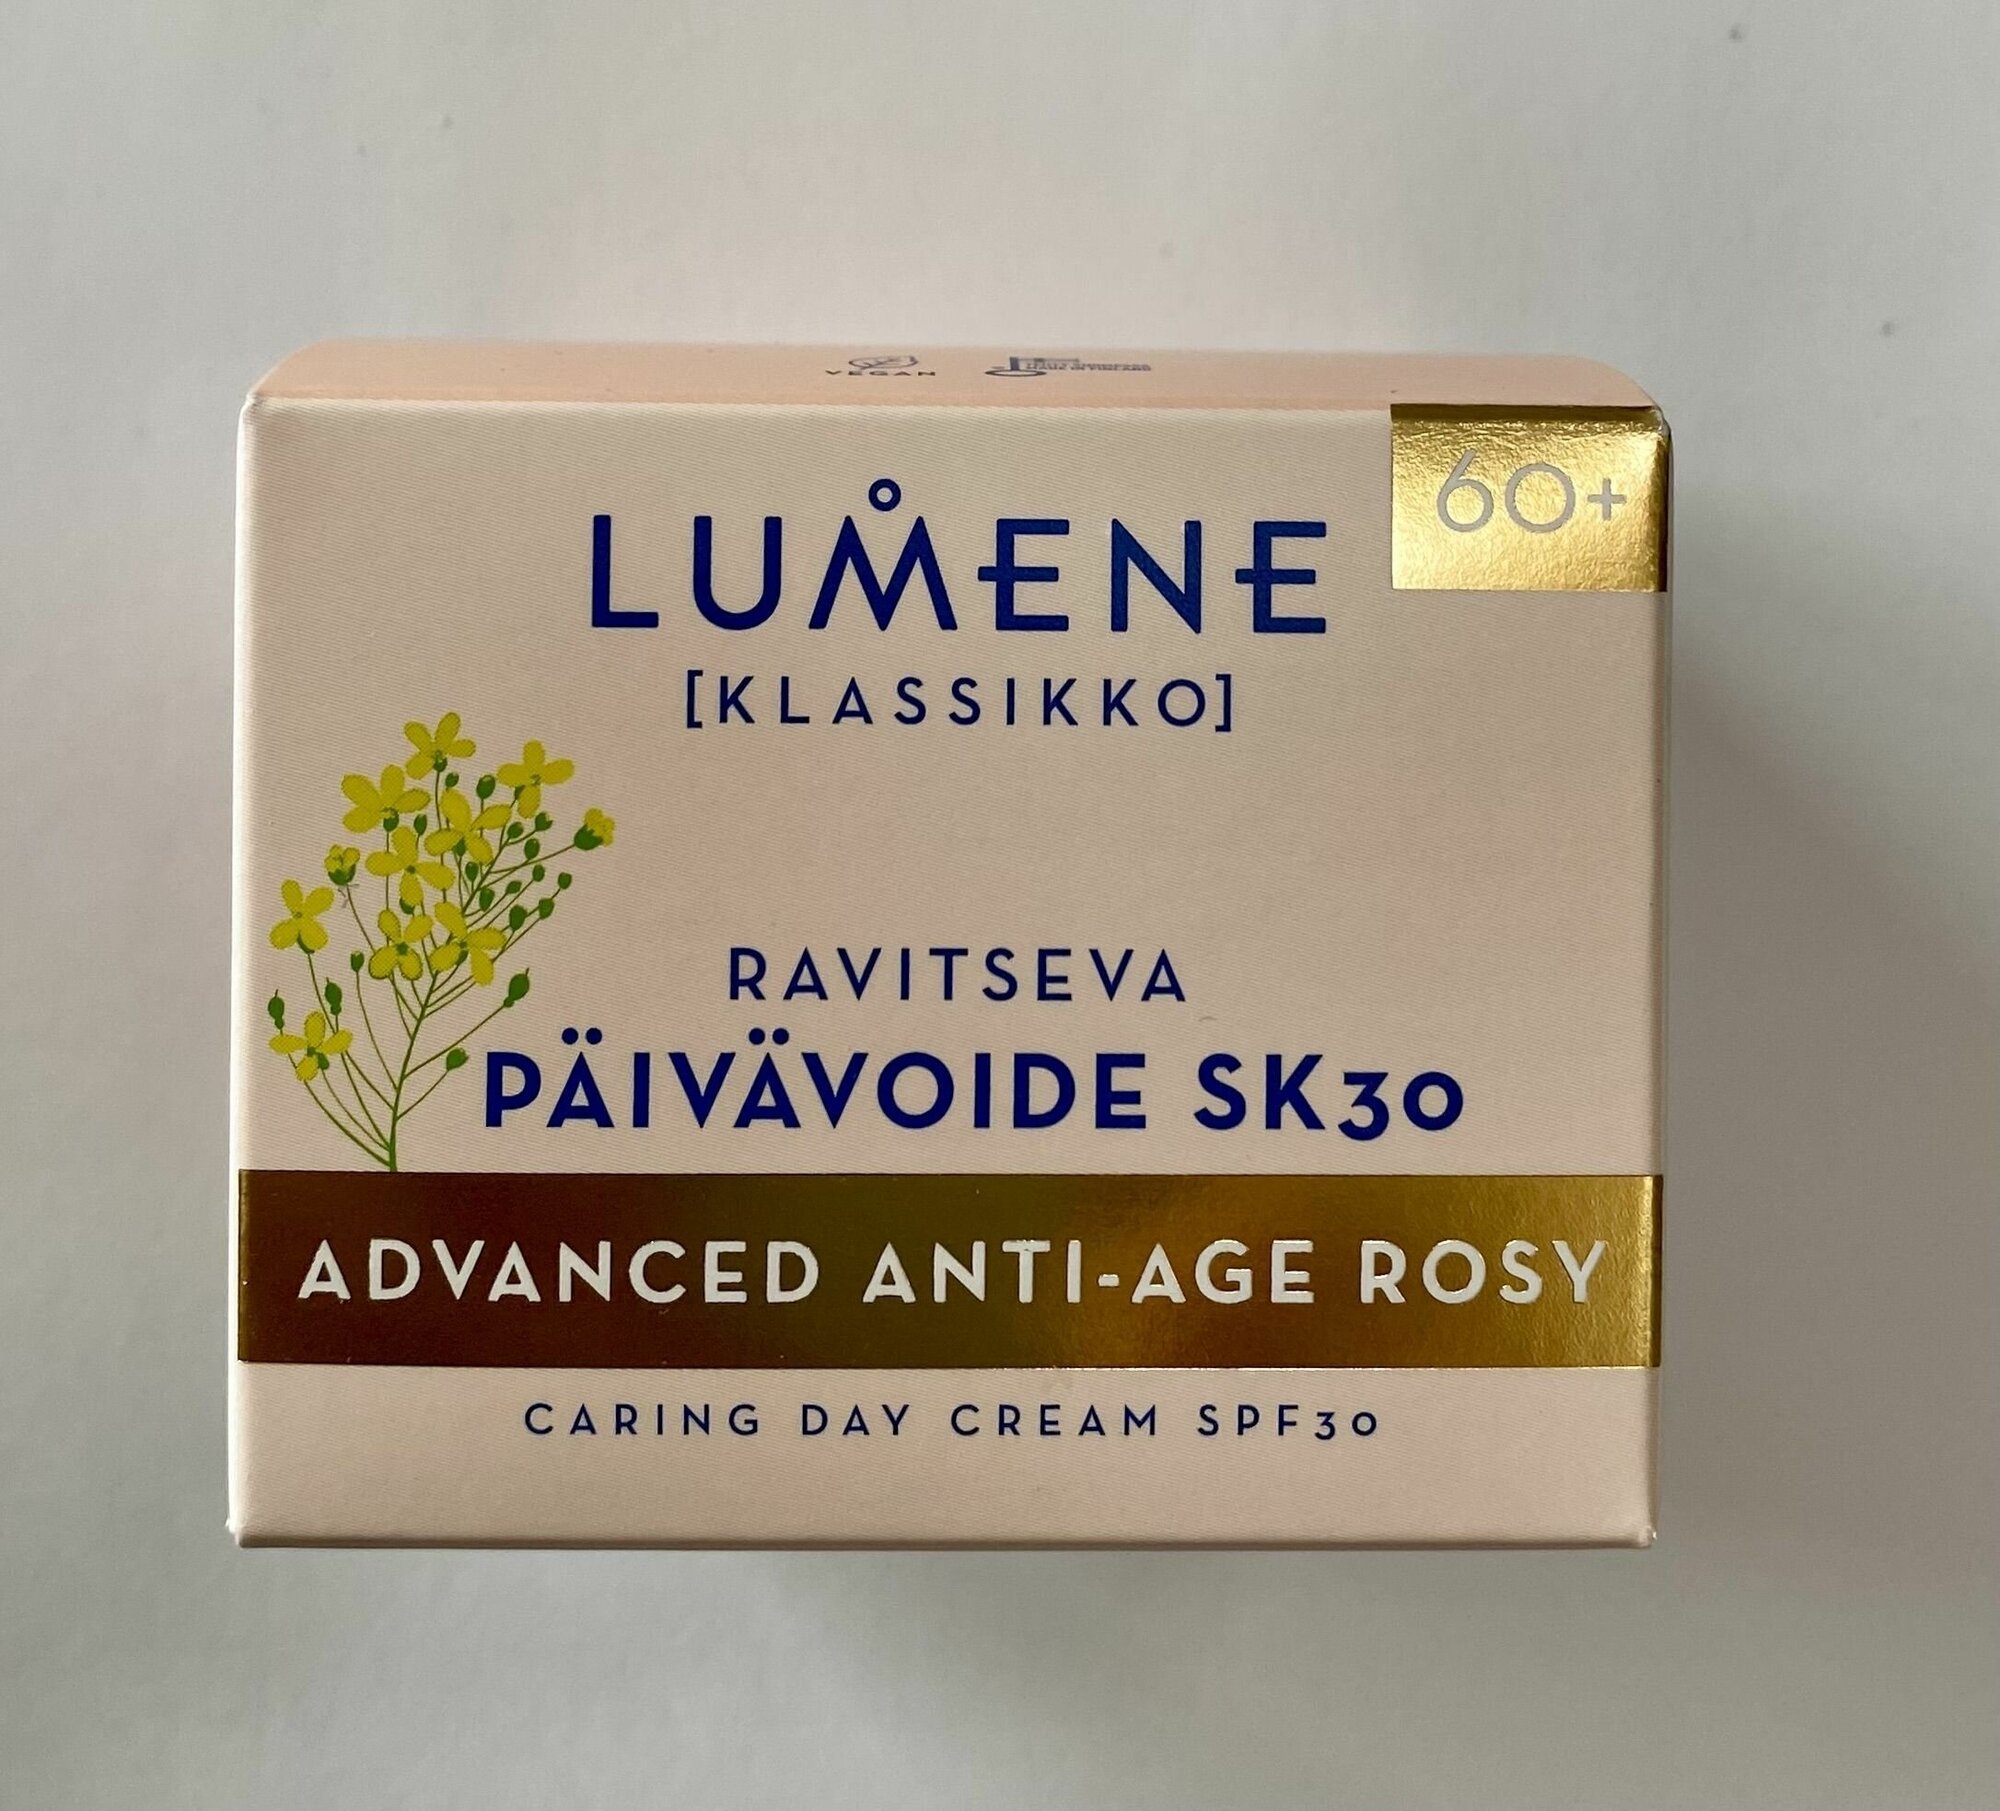 Lumene klassiko anti age 60+ SK30 дневной антивозрастной ухаживающий крем, 50 мл (из Финляндии)